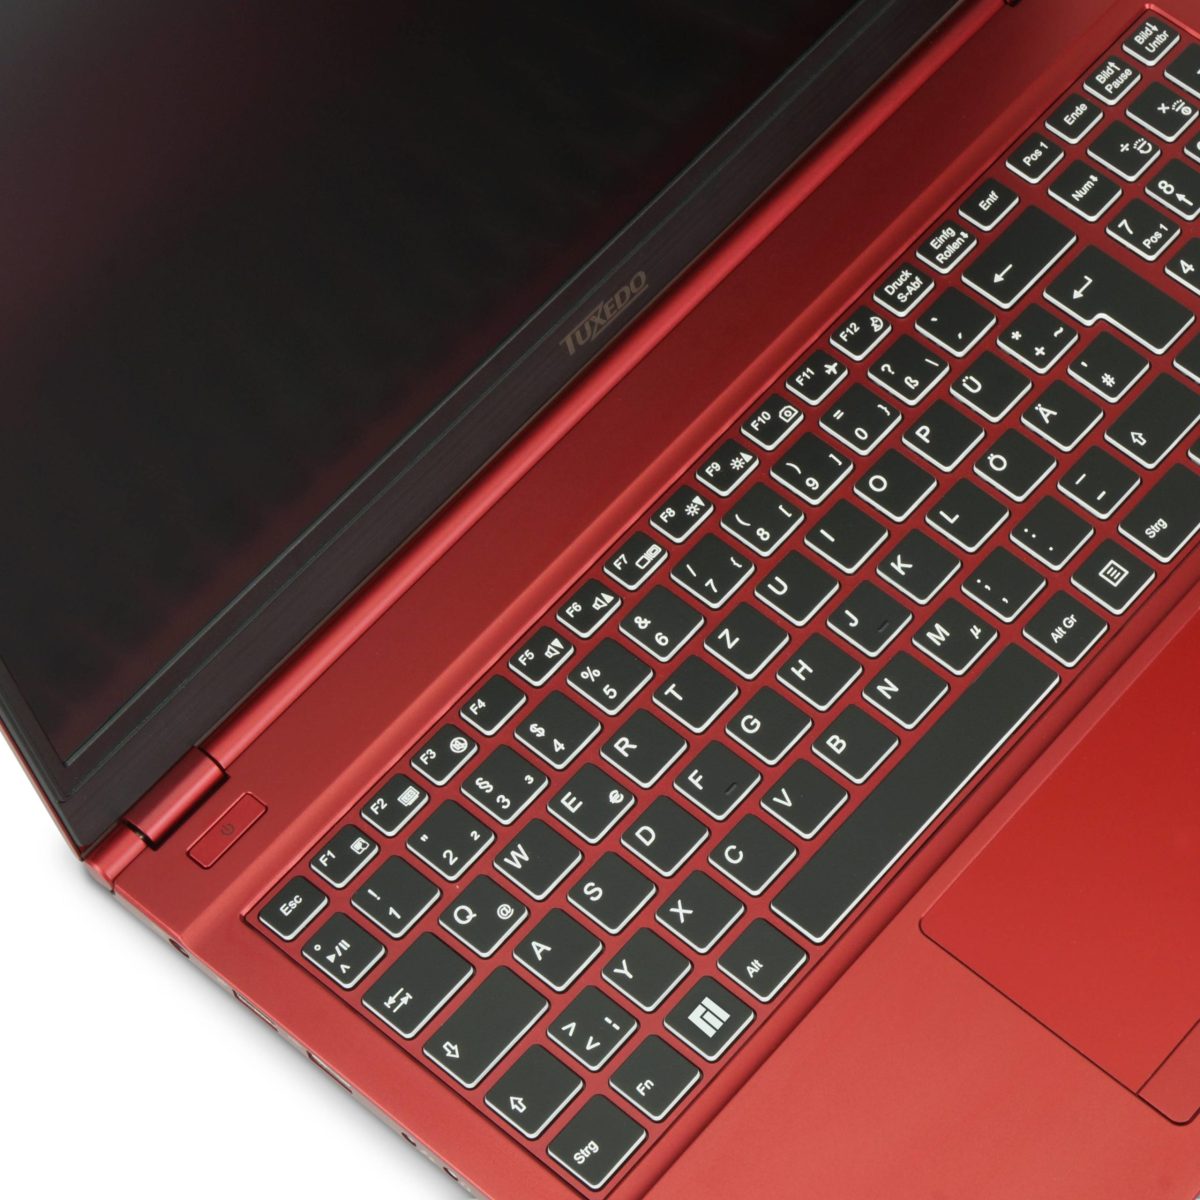 TUXEDO Computers anuncia laptop InfinityBook Manjaro Linux